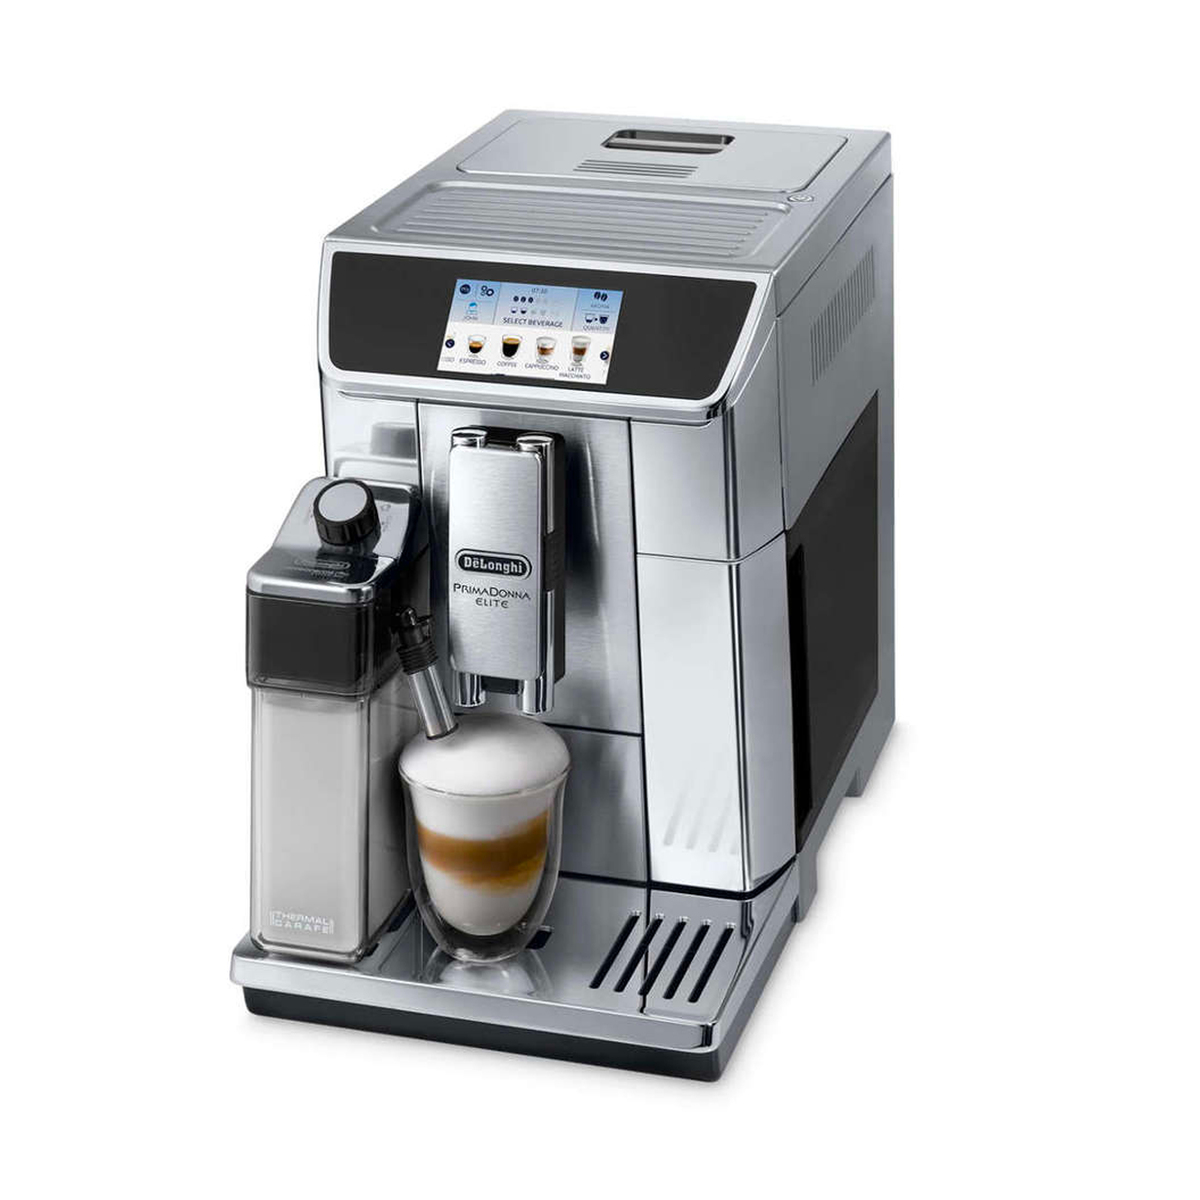 Delonghi Automatic Coffee machine ECAM 650.75MS